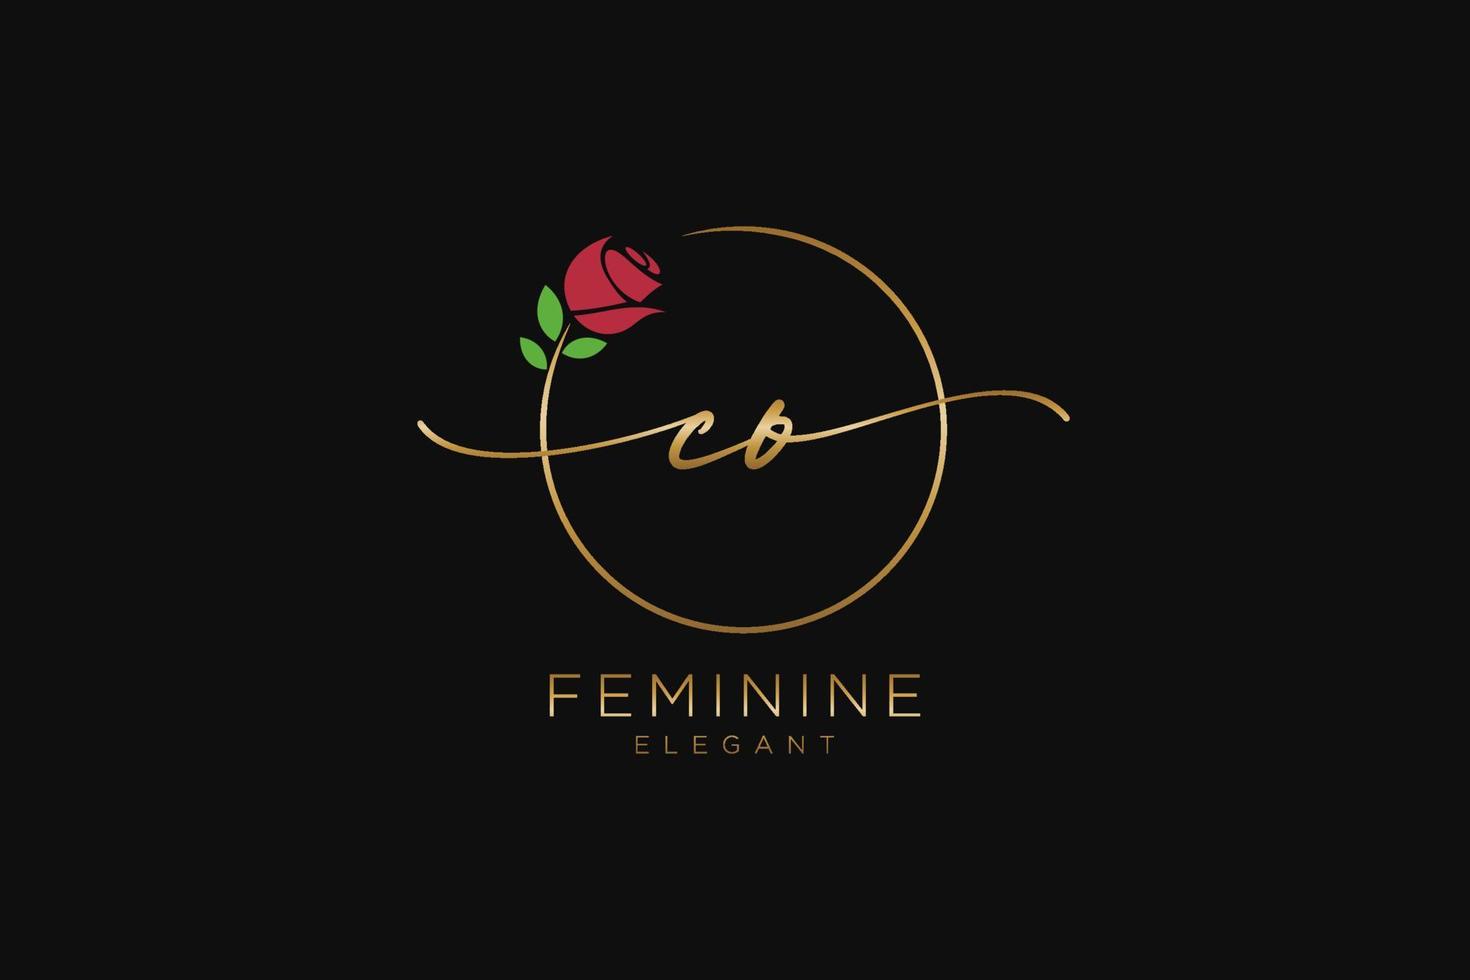 initial CO Feminine logo beauty monogram and elegant logo design, handwriting logo of initial signature, wedding, fashion, floral and botanical with creative template. vector